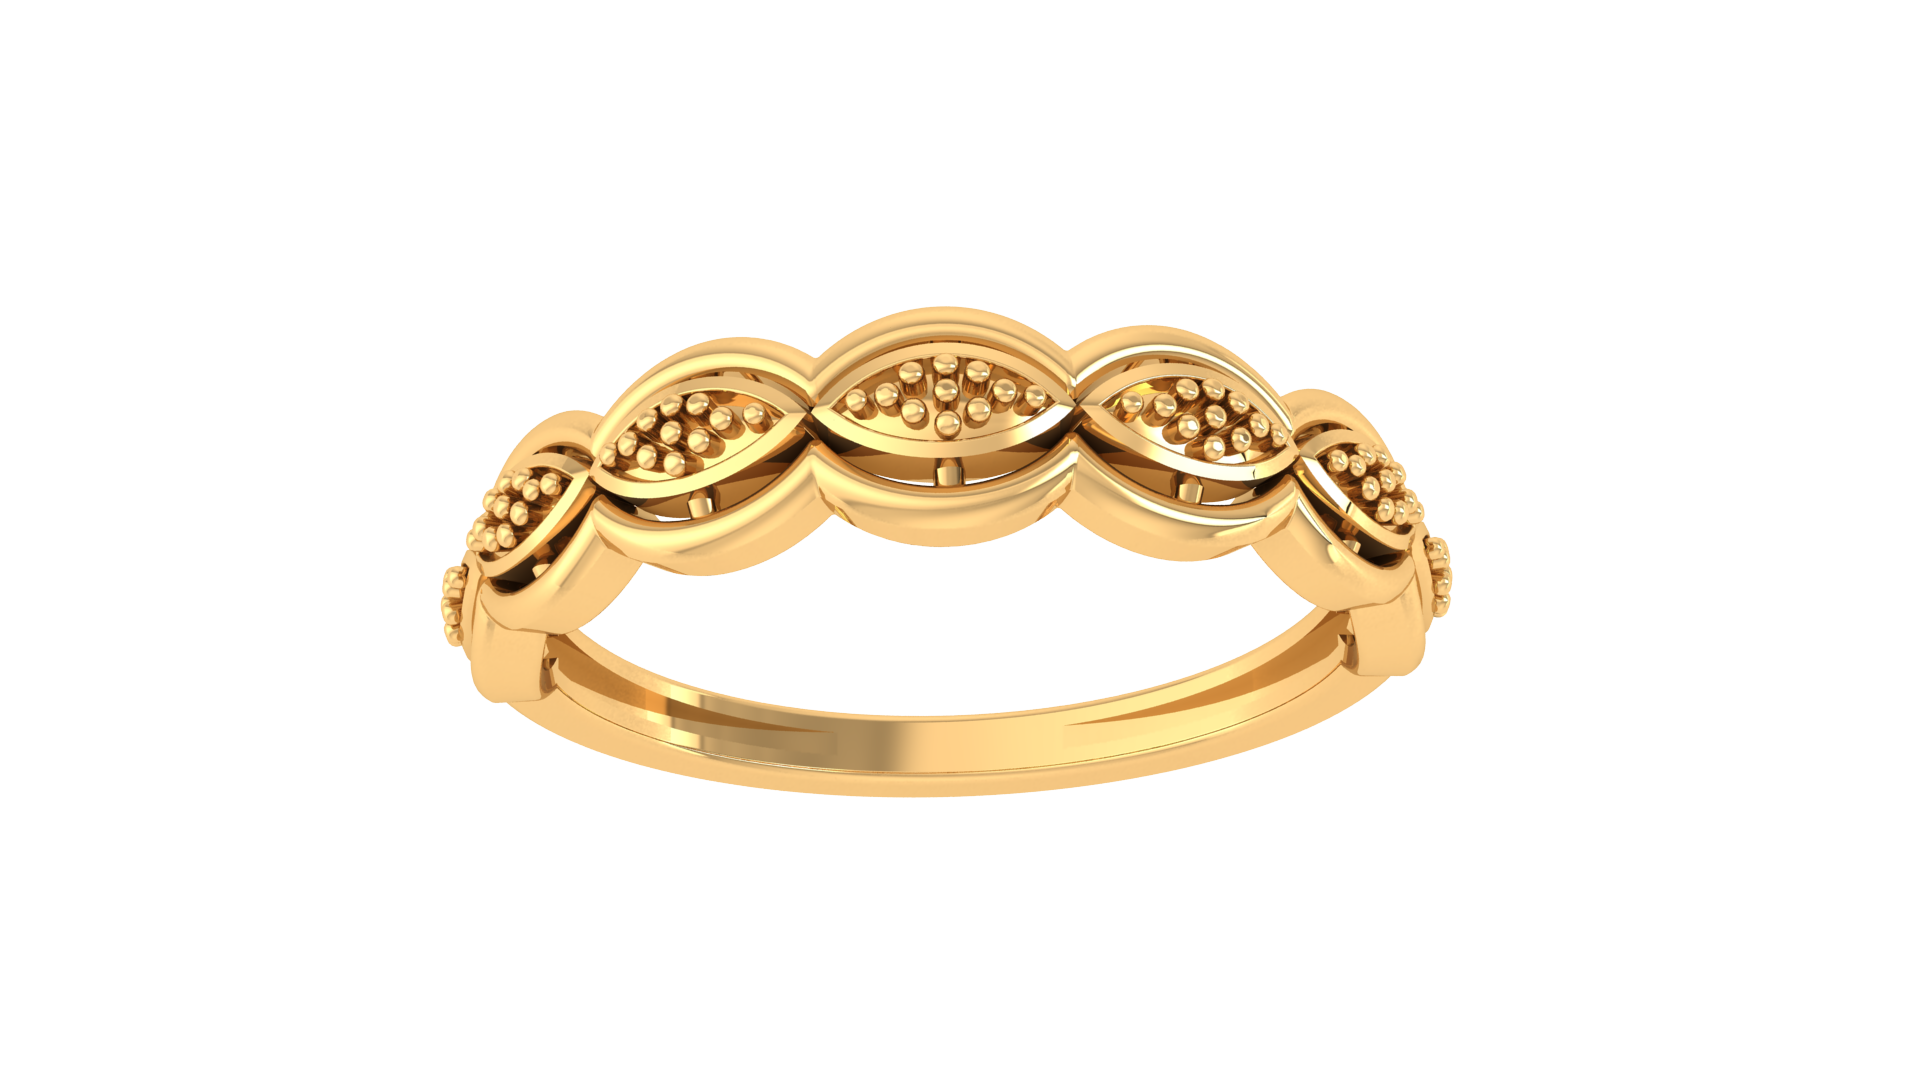 Buy Stunning Gold Ring | kasturidiamond.com